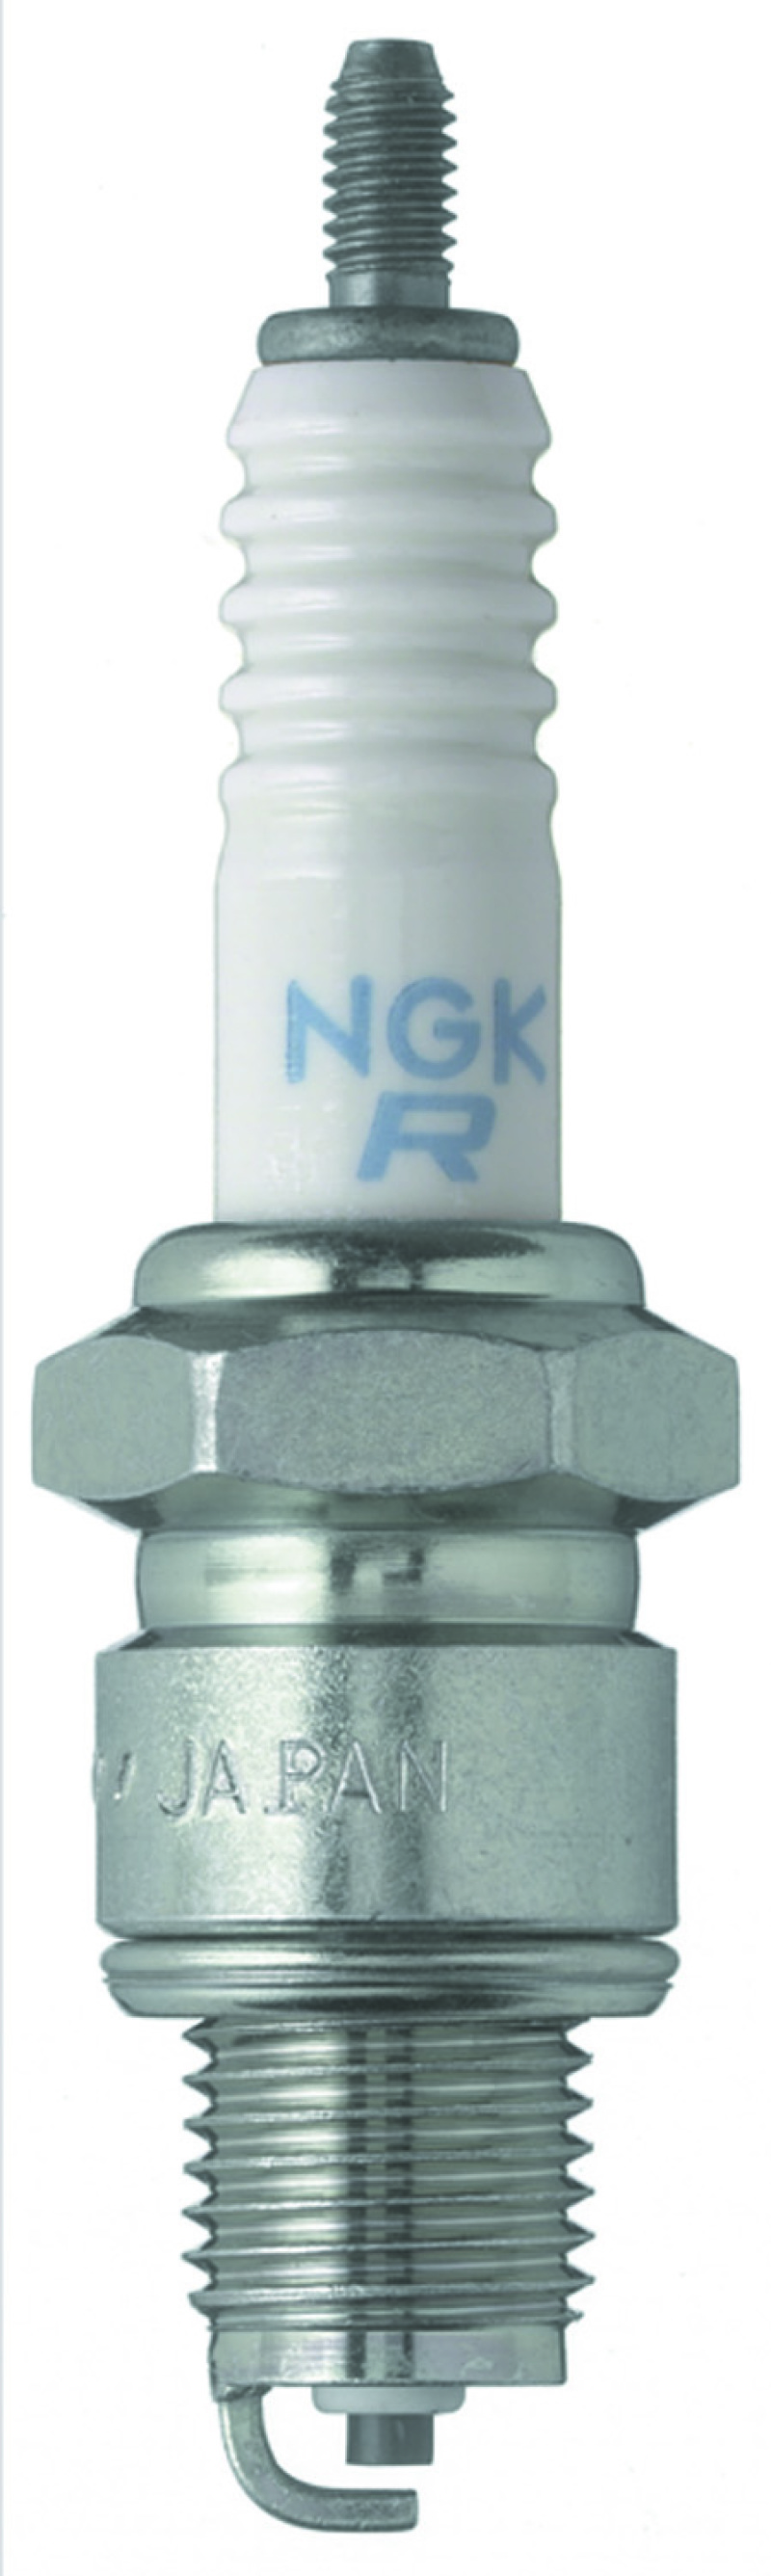 NGK Nickel Spark Plug Box of 10 (DR4HS) - 3326